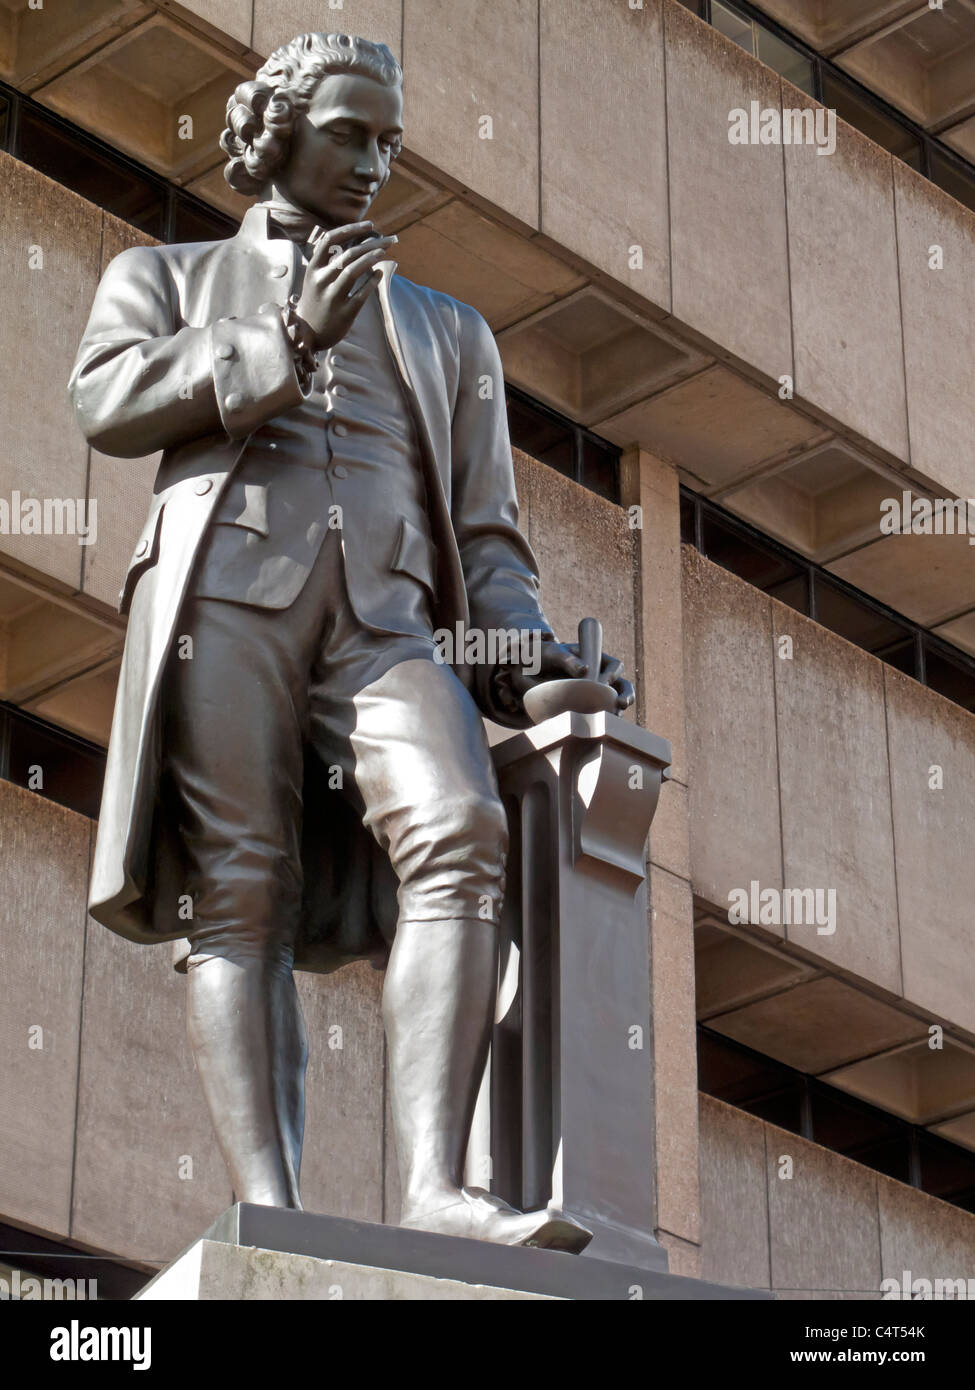 Statue of Joseph Priestley in Chamberlain Square Birmingham England UK by A W Williamson 1874 recast in bronze 1951 Stock Photo